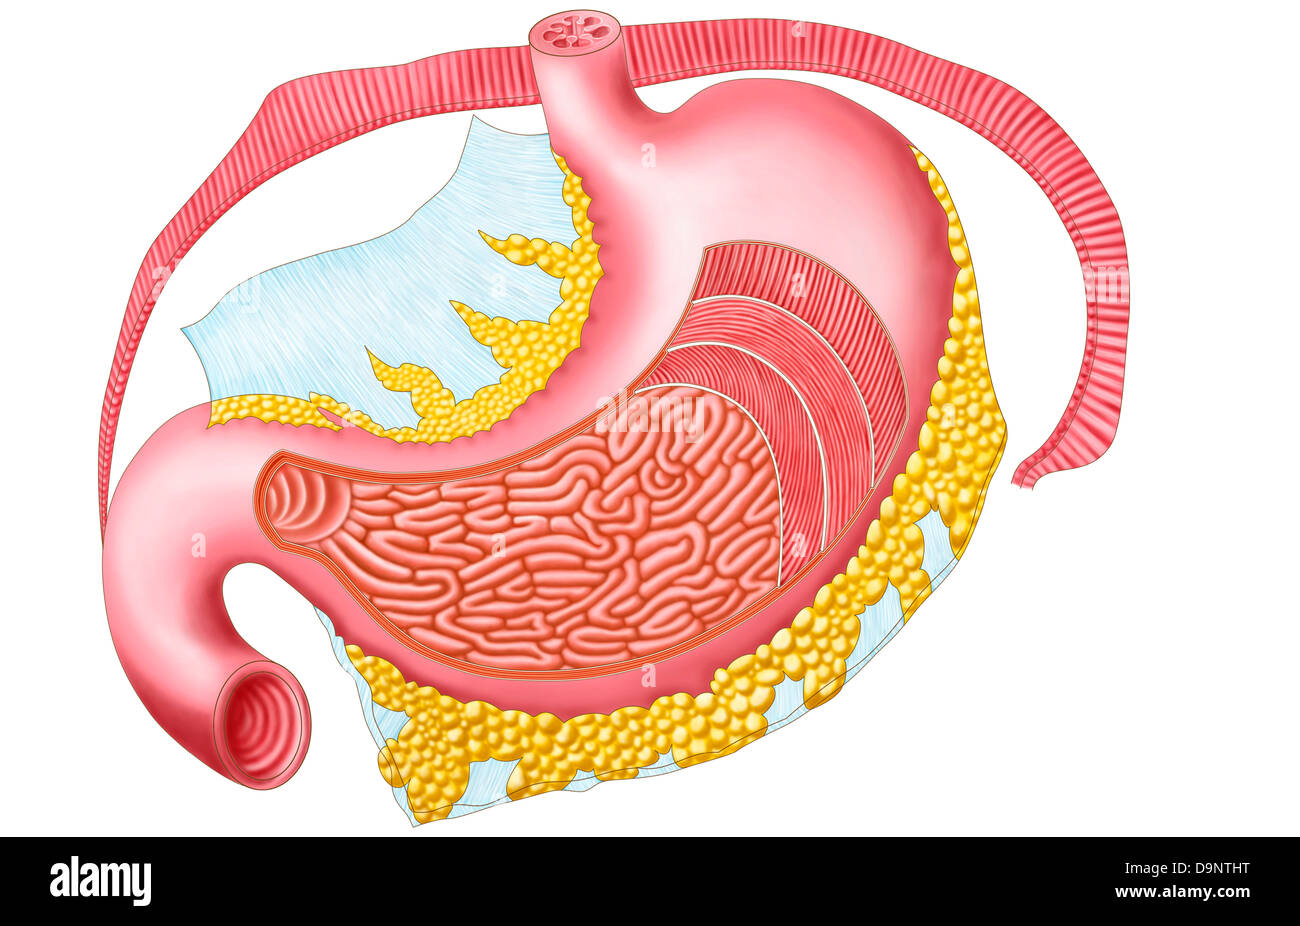 Anatomia dello stomaco umano. Foto Stock